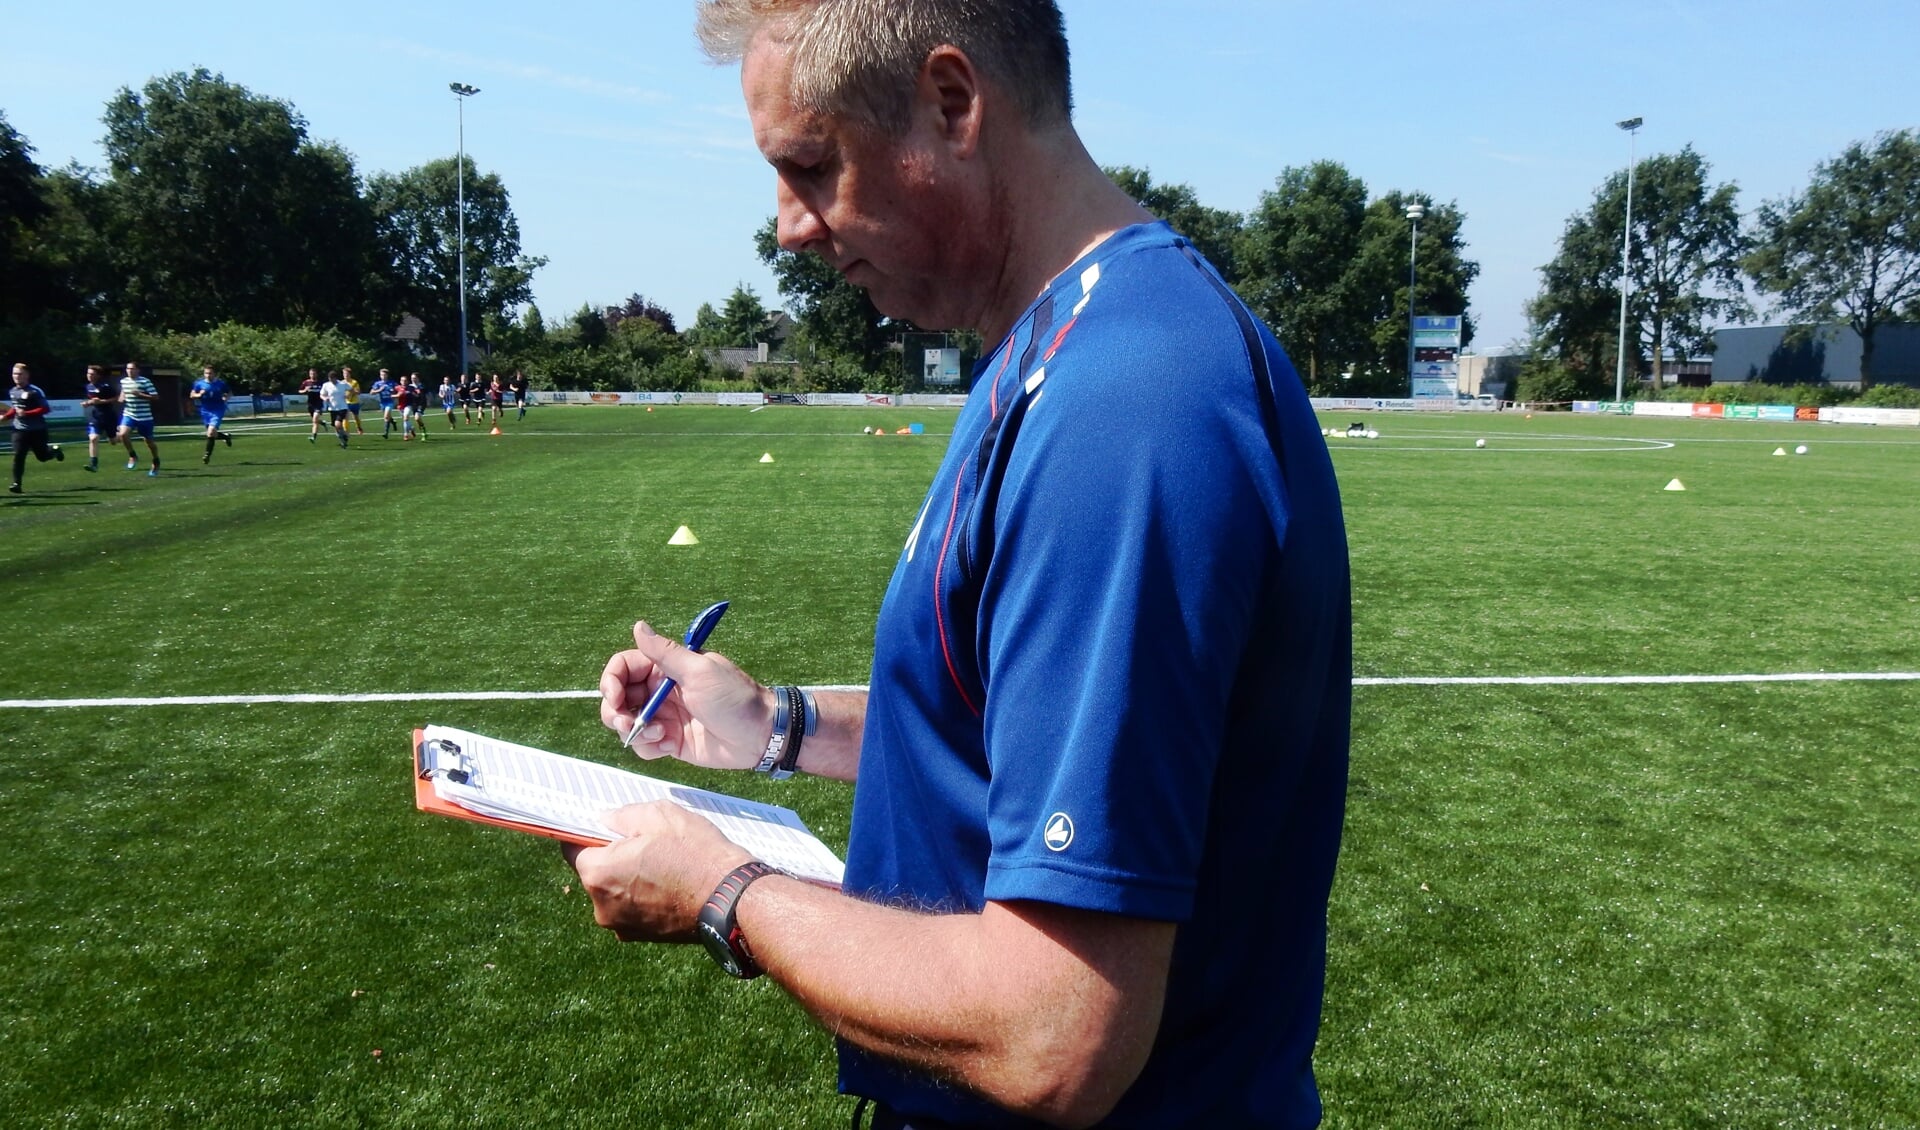 De trainer van VV Nijnsel, Arno Methorst